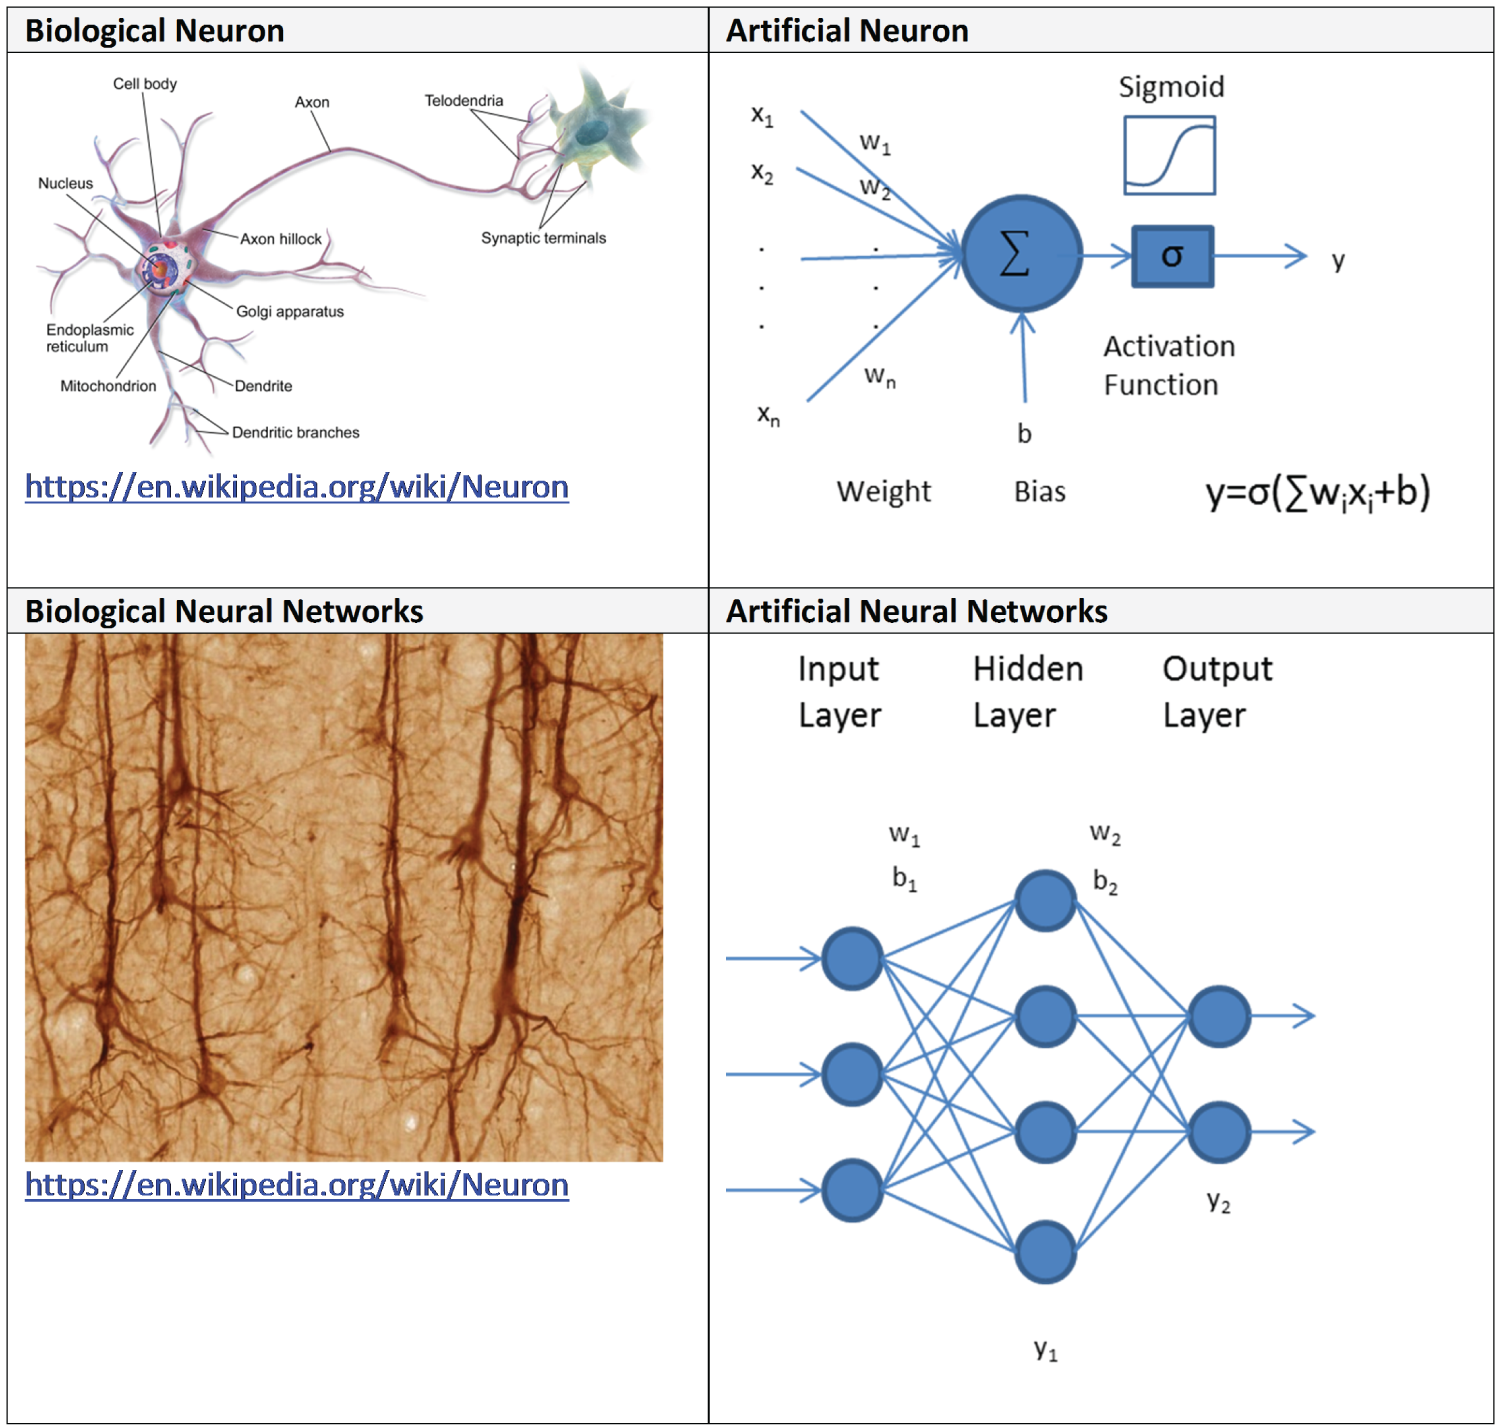 Snapshot of biological neuron versus artificial neuron, and biological neuron networks versus artificial neuron networks